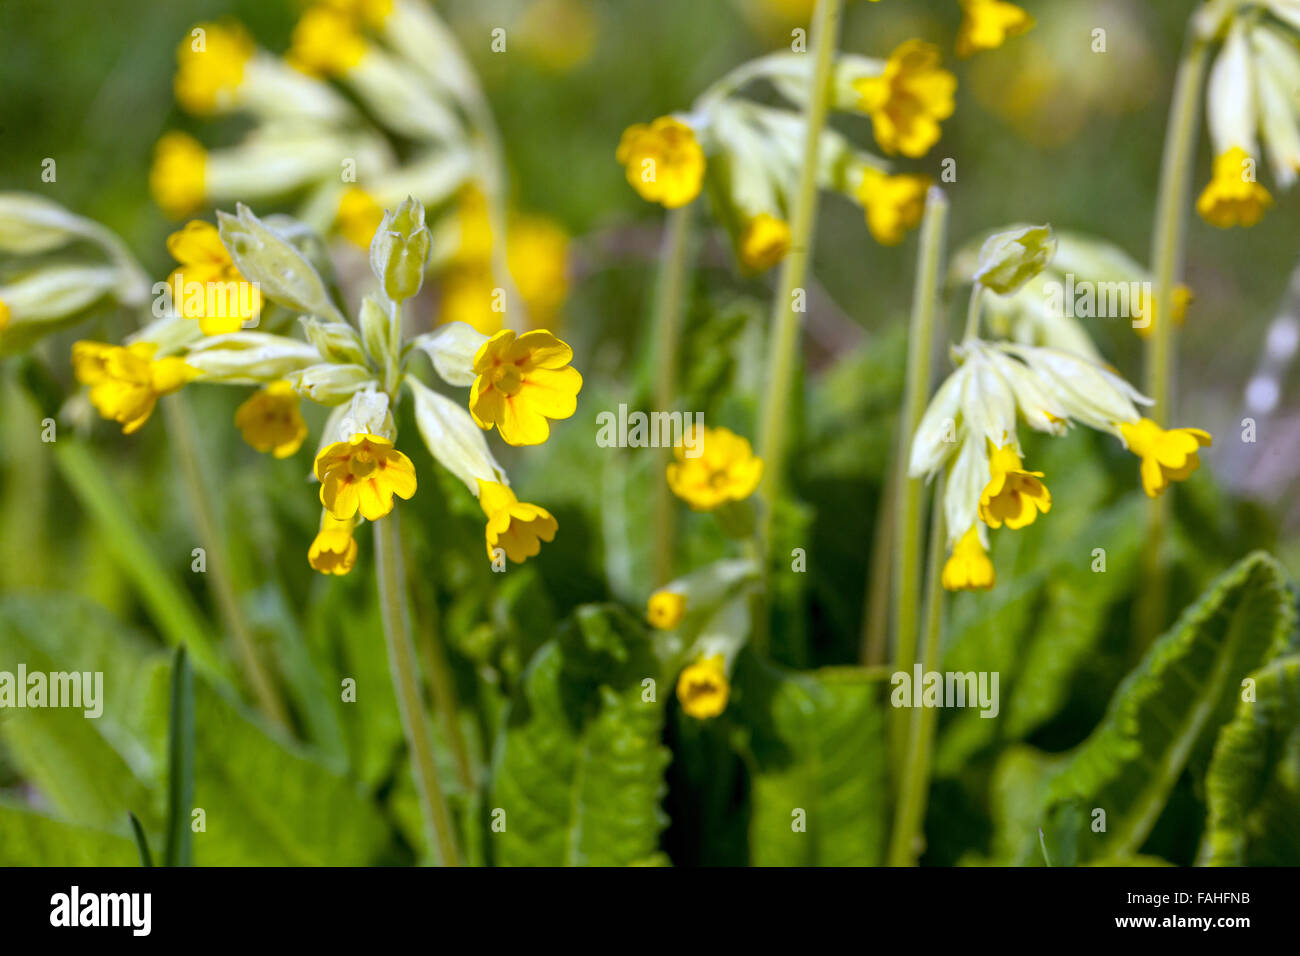 Primula veris. Cowslip flower in the grass Stock Photo